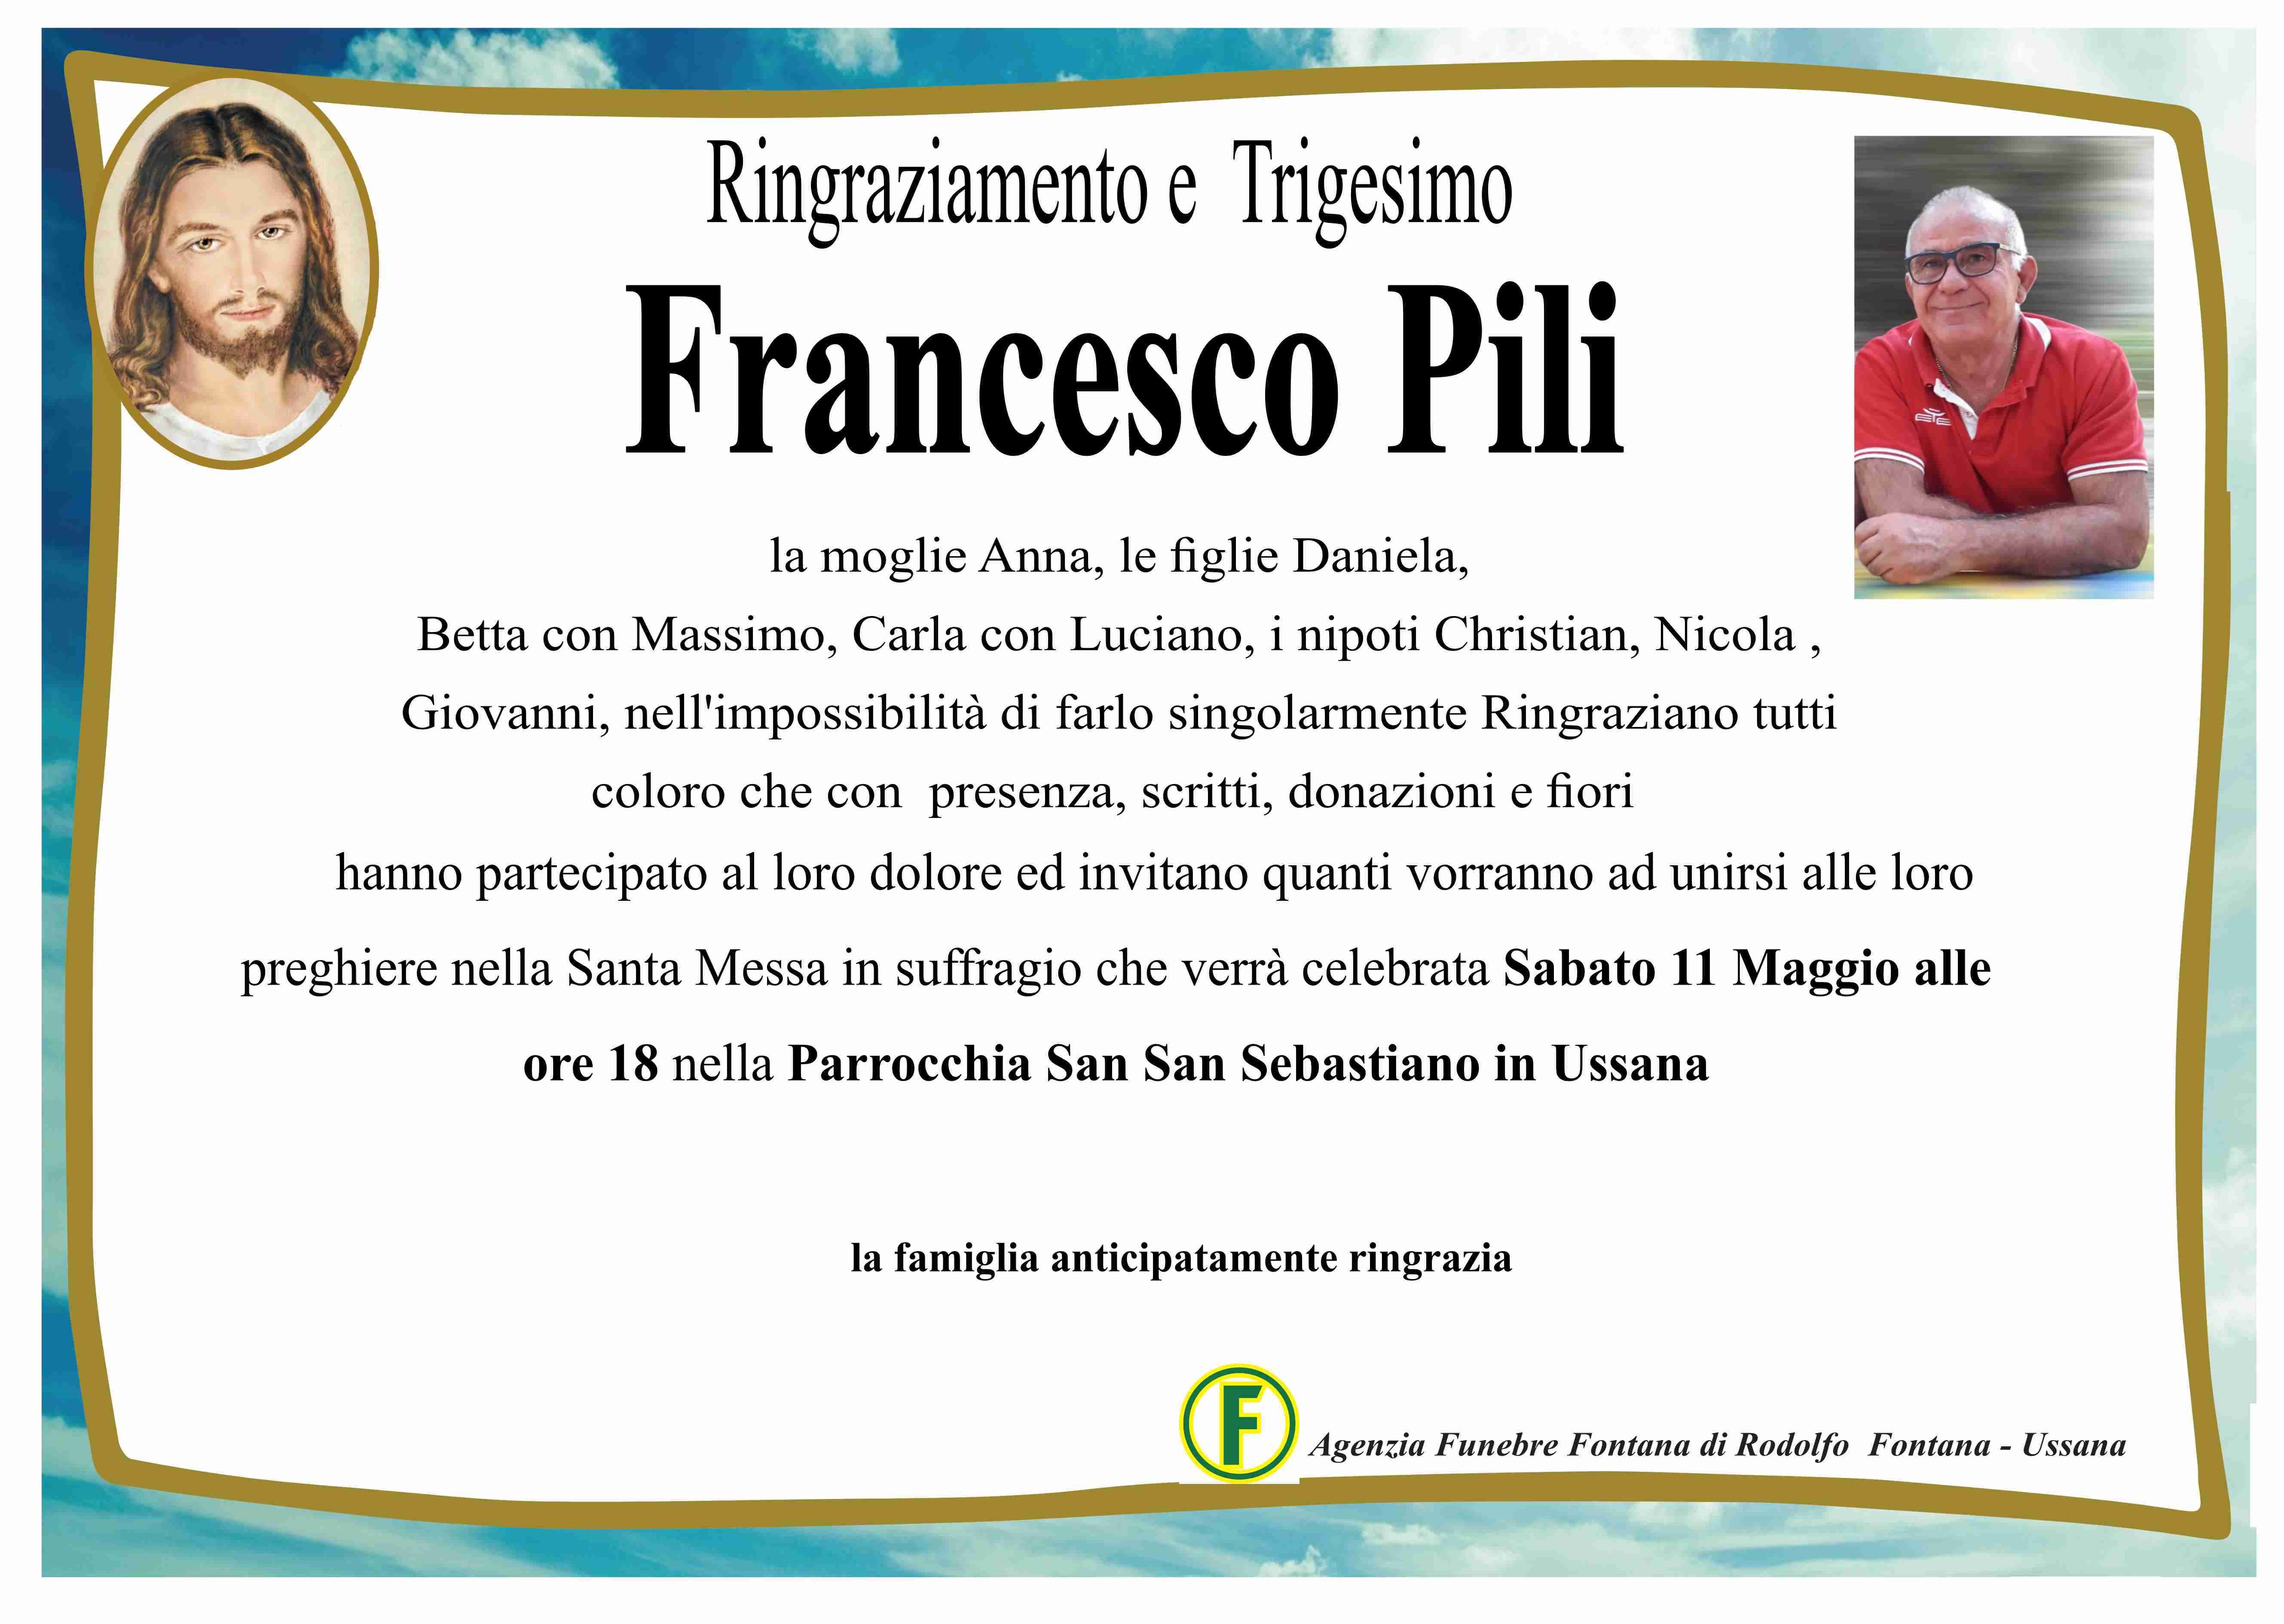 Francesco Pili